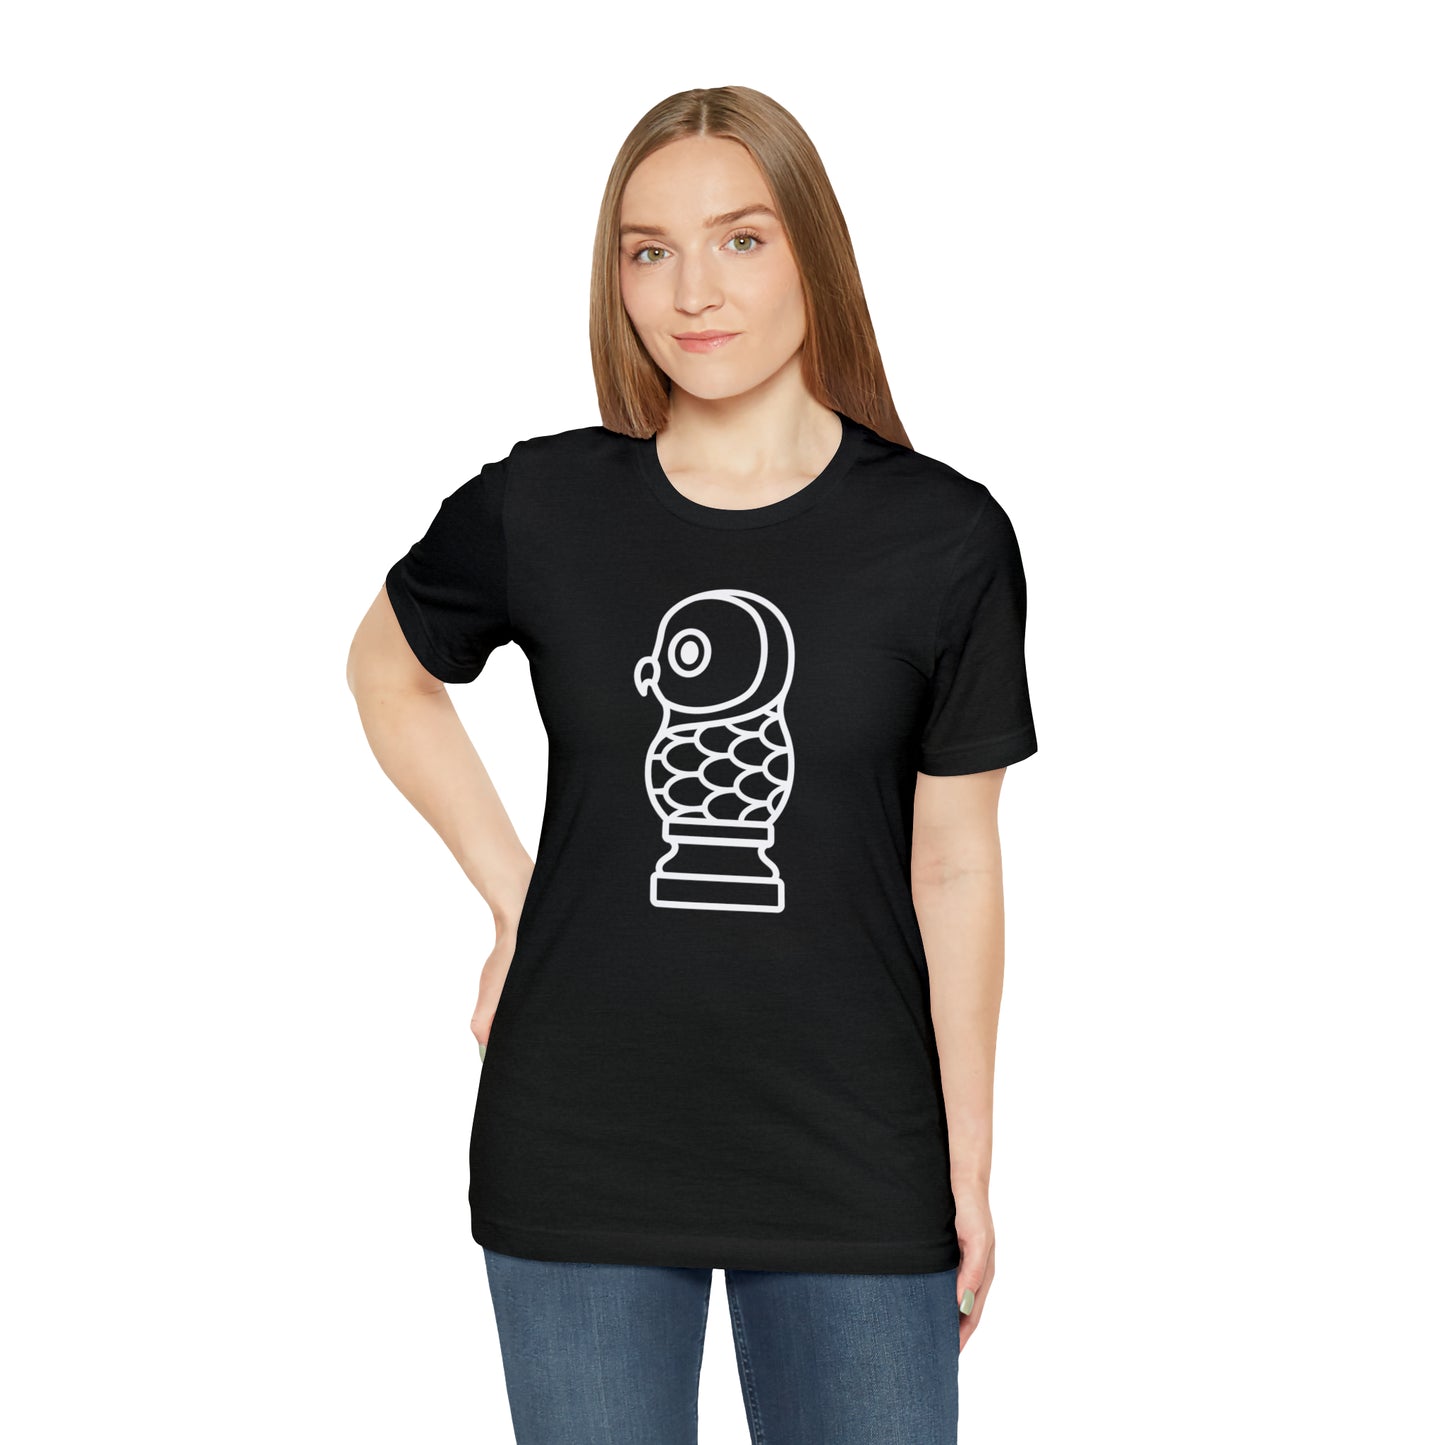 Knight Owl Design – Tee Shirt